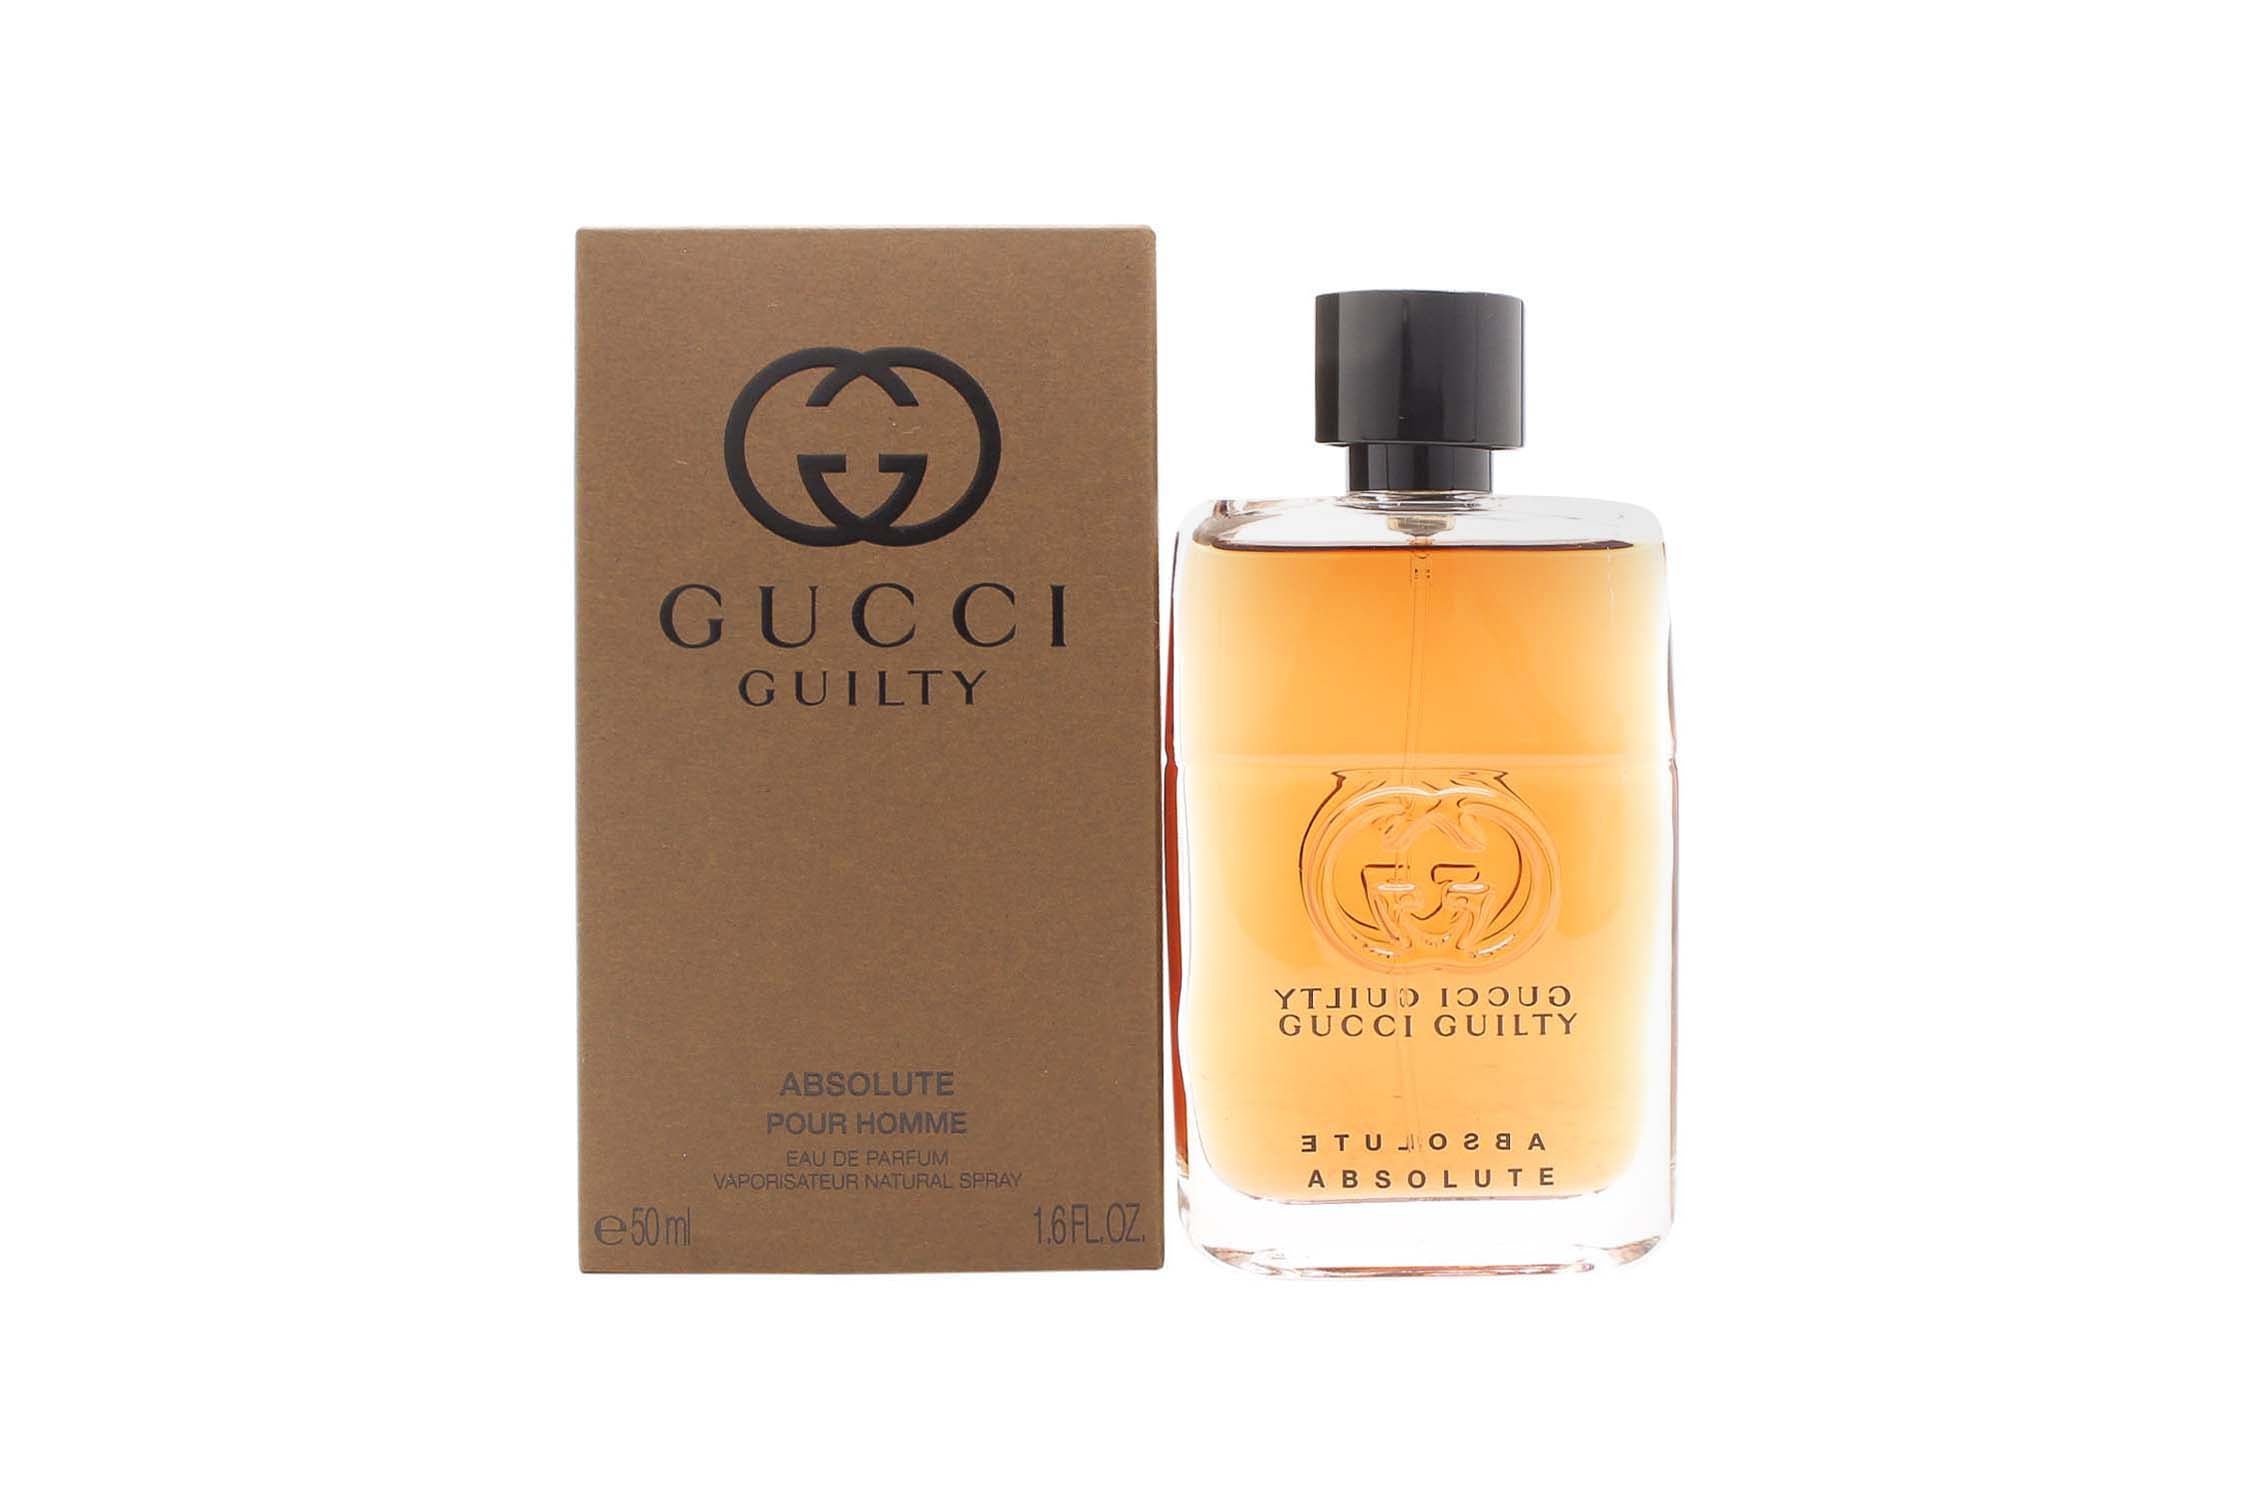 View Gucci Guilty Absolute Eau de Parfum 50ml Spray information